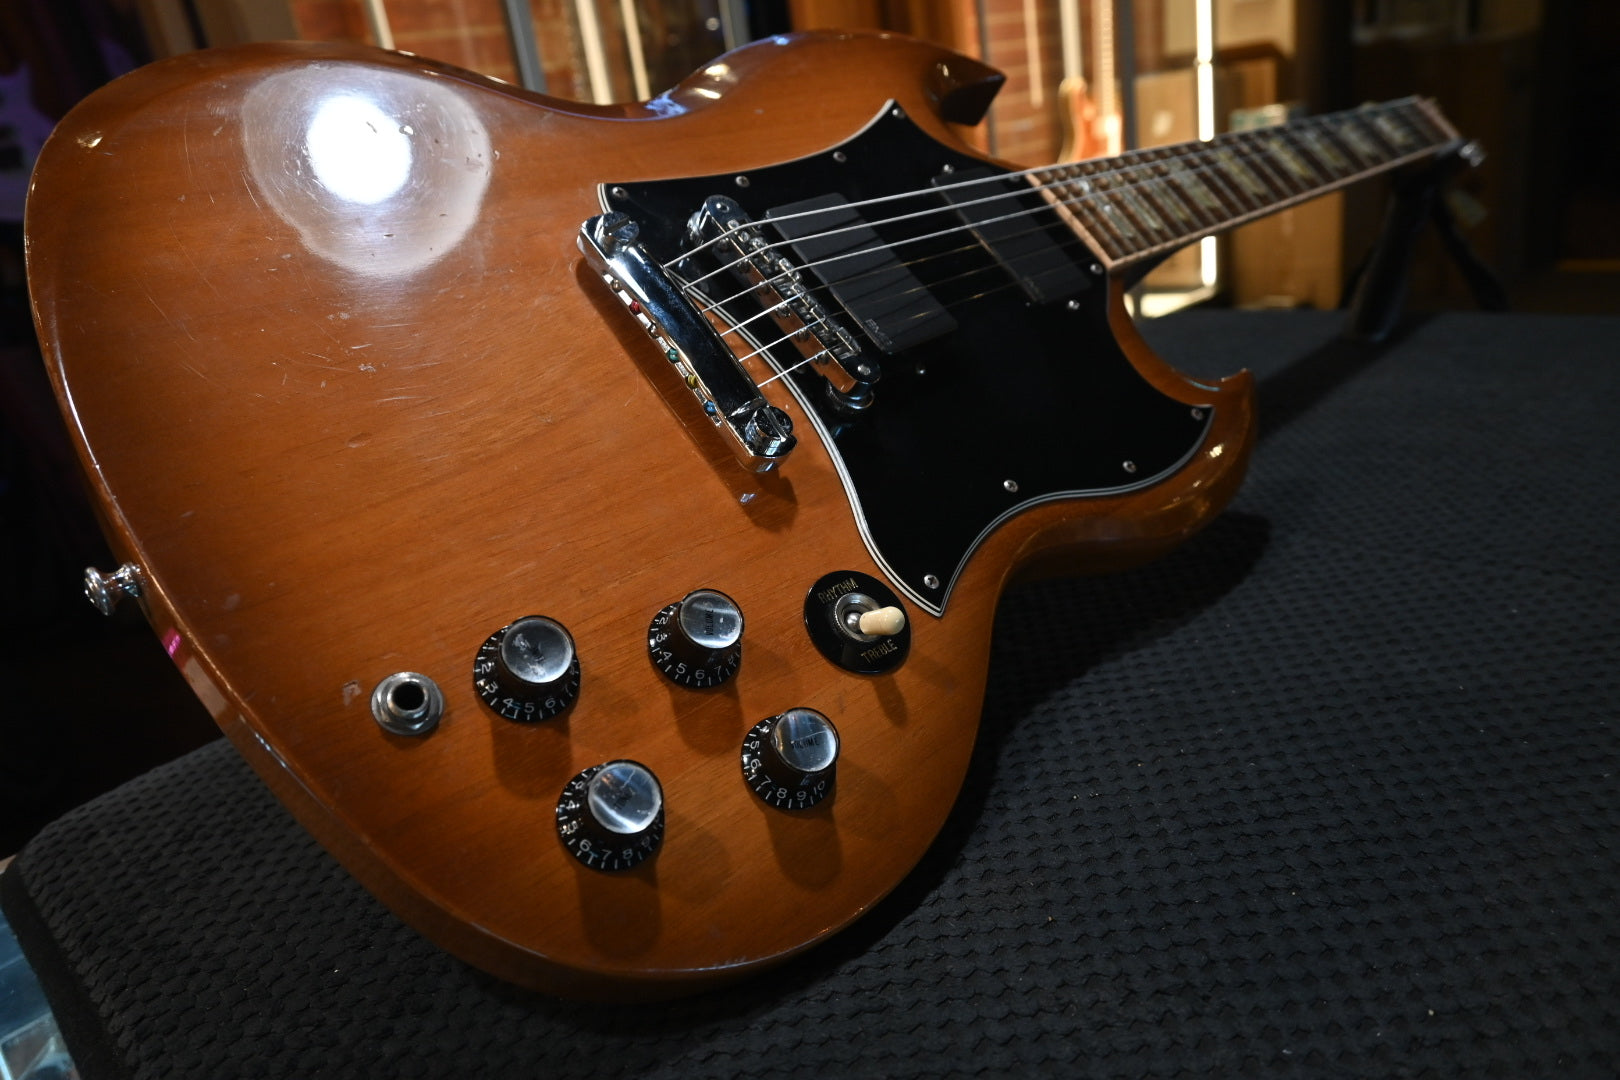 Gibson SG Standard 2005 EMG 81/85s - Natural Finish Burst Guitar #5331 PRE-OWNED - Danville Music